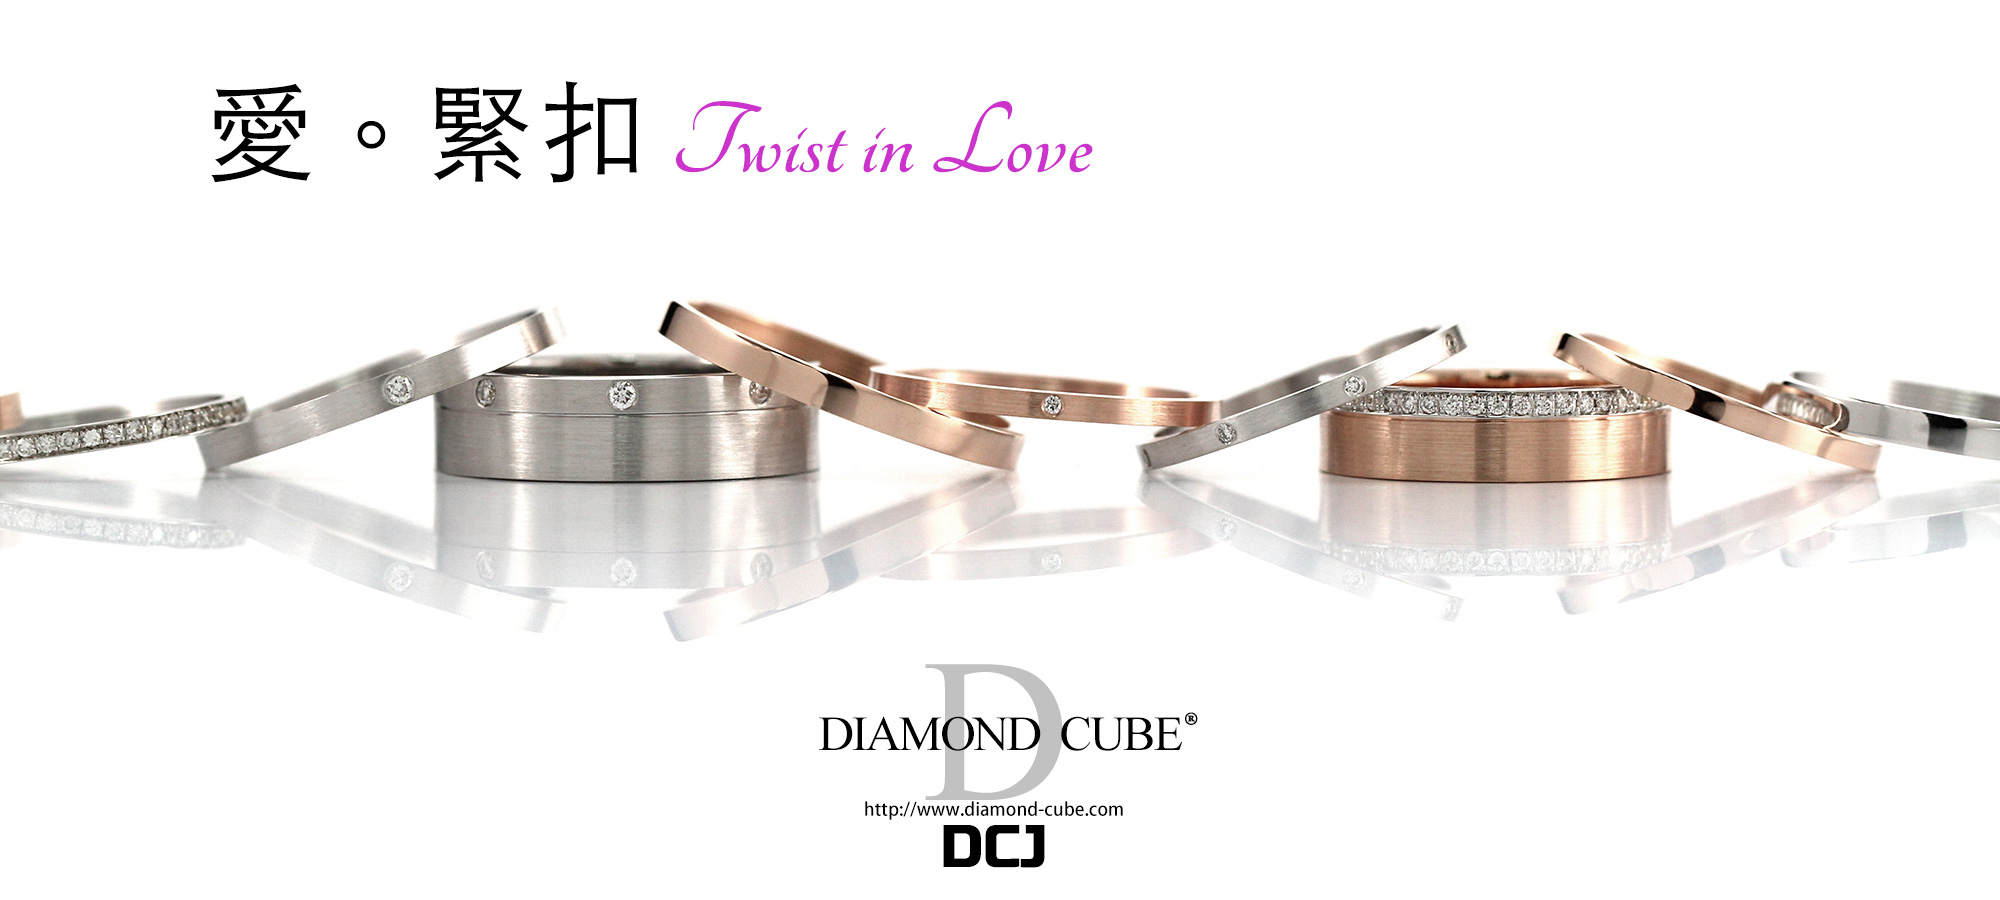 Diamond Cube - 婚戒 - Special - Twist in Love